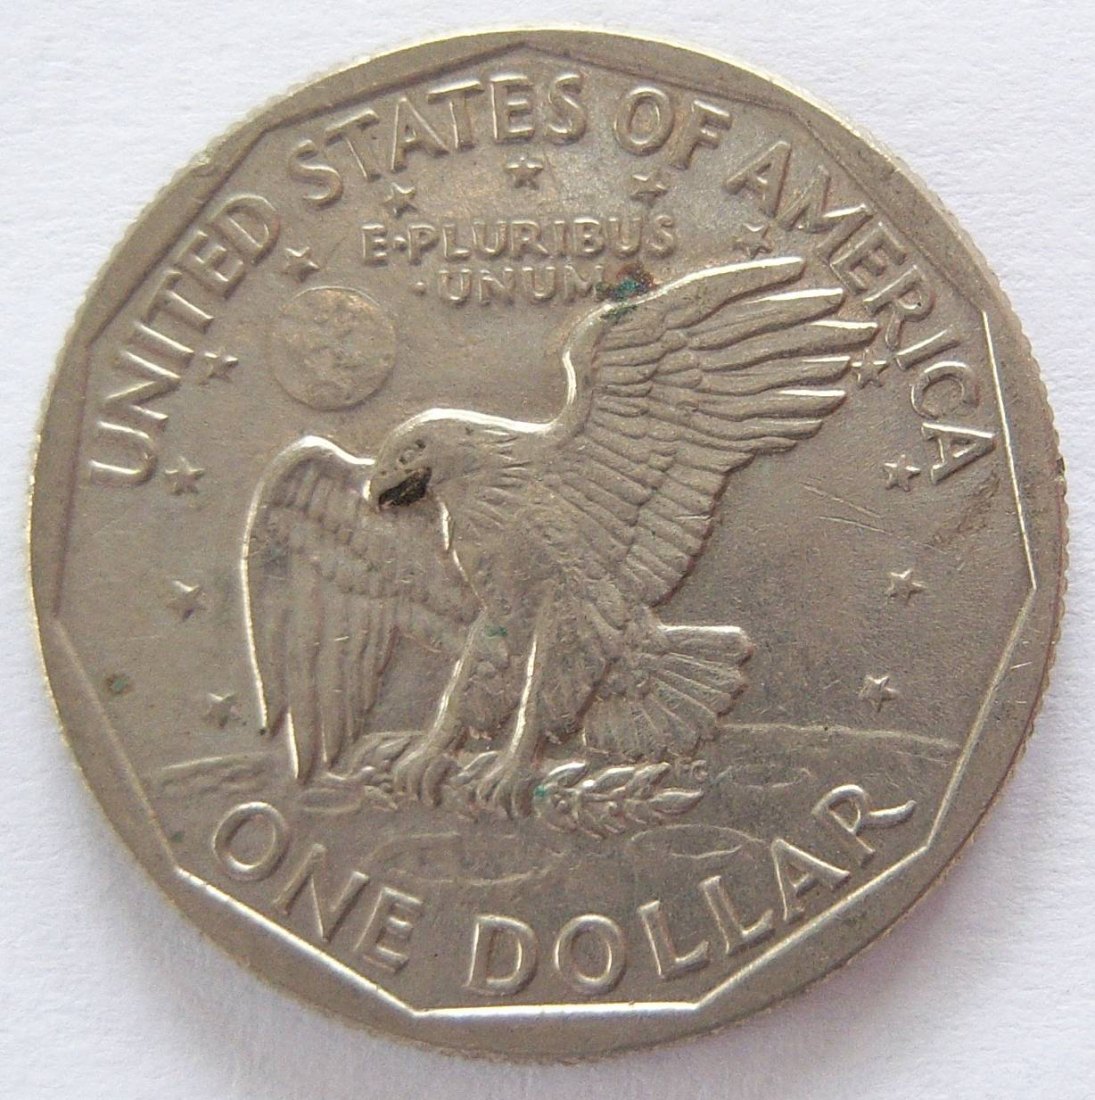  USA Susan B. Anthony 1 One Dollar 1979 P   